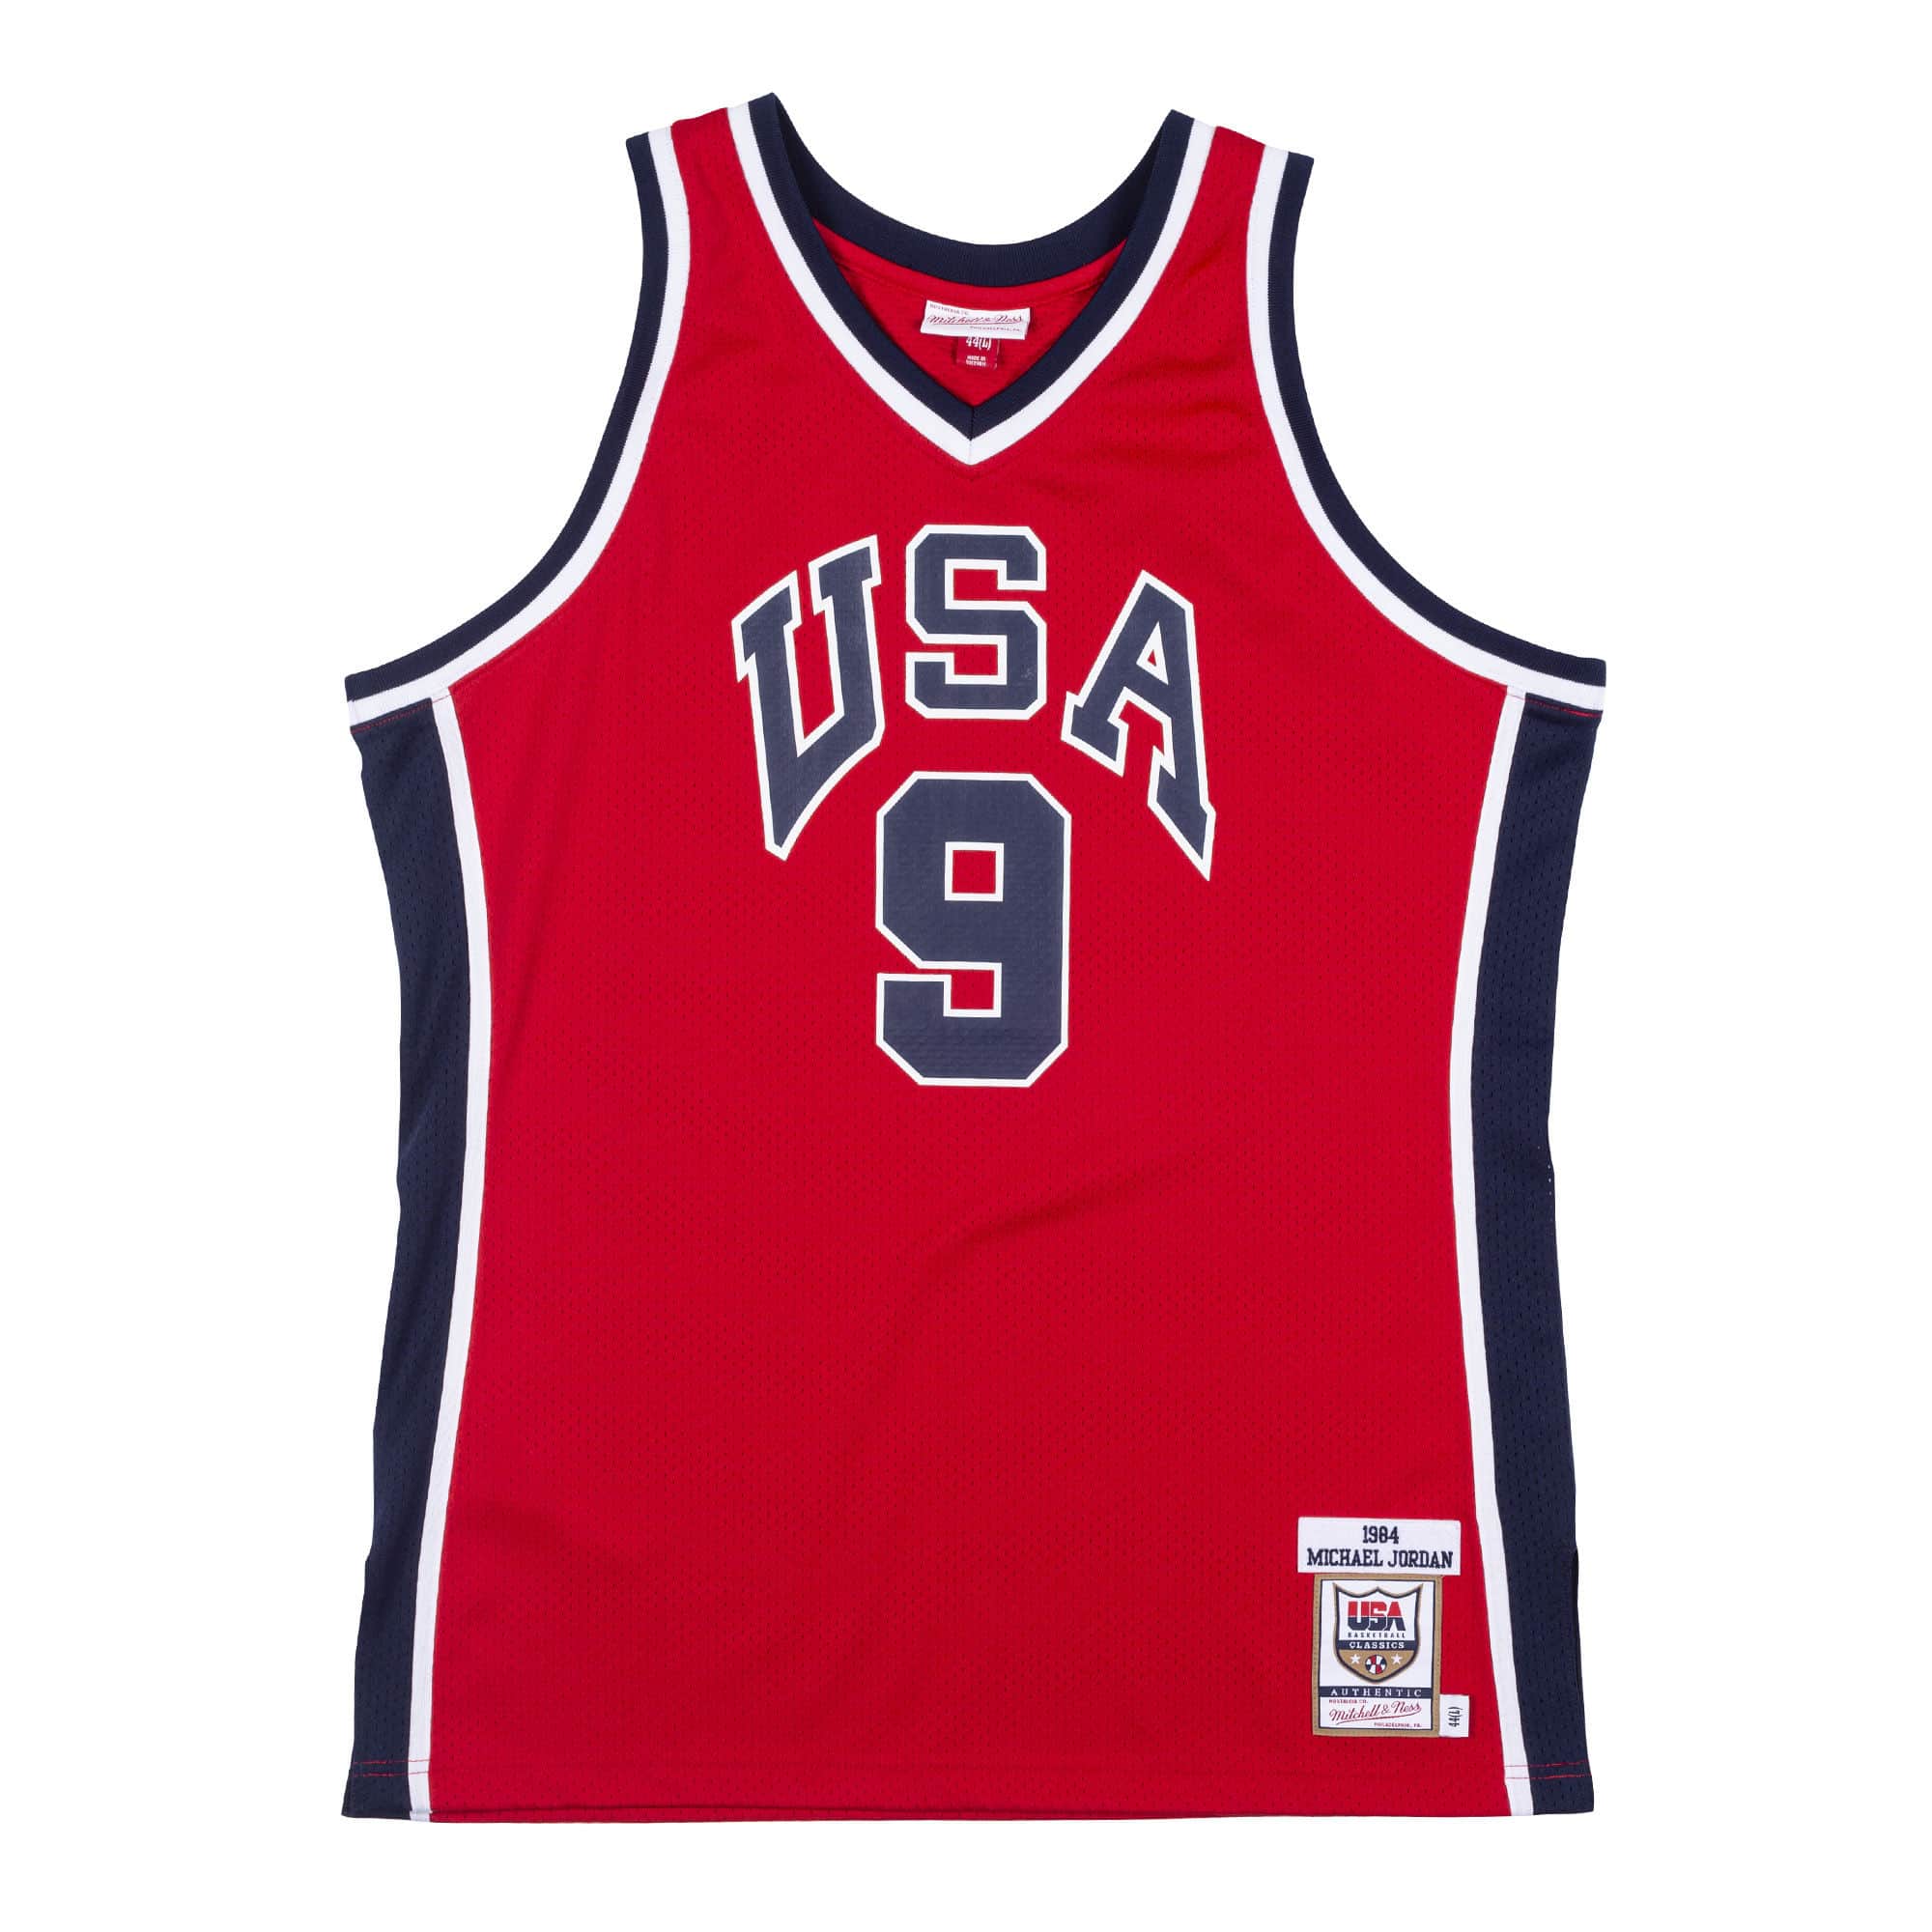 Jersey Team USA 1984 Michael Jordan